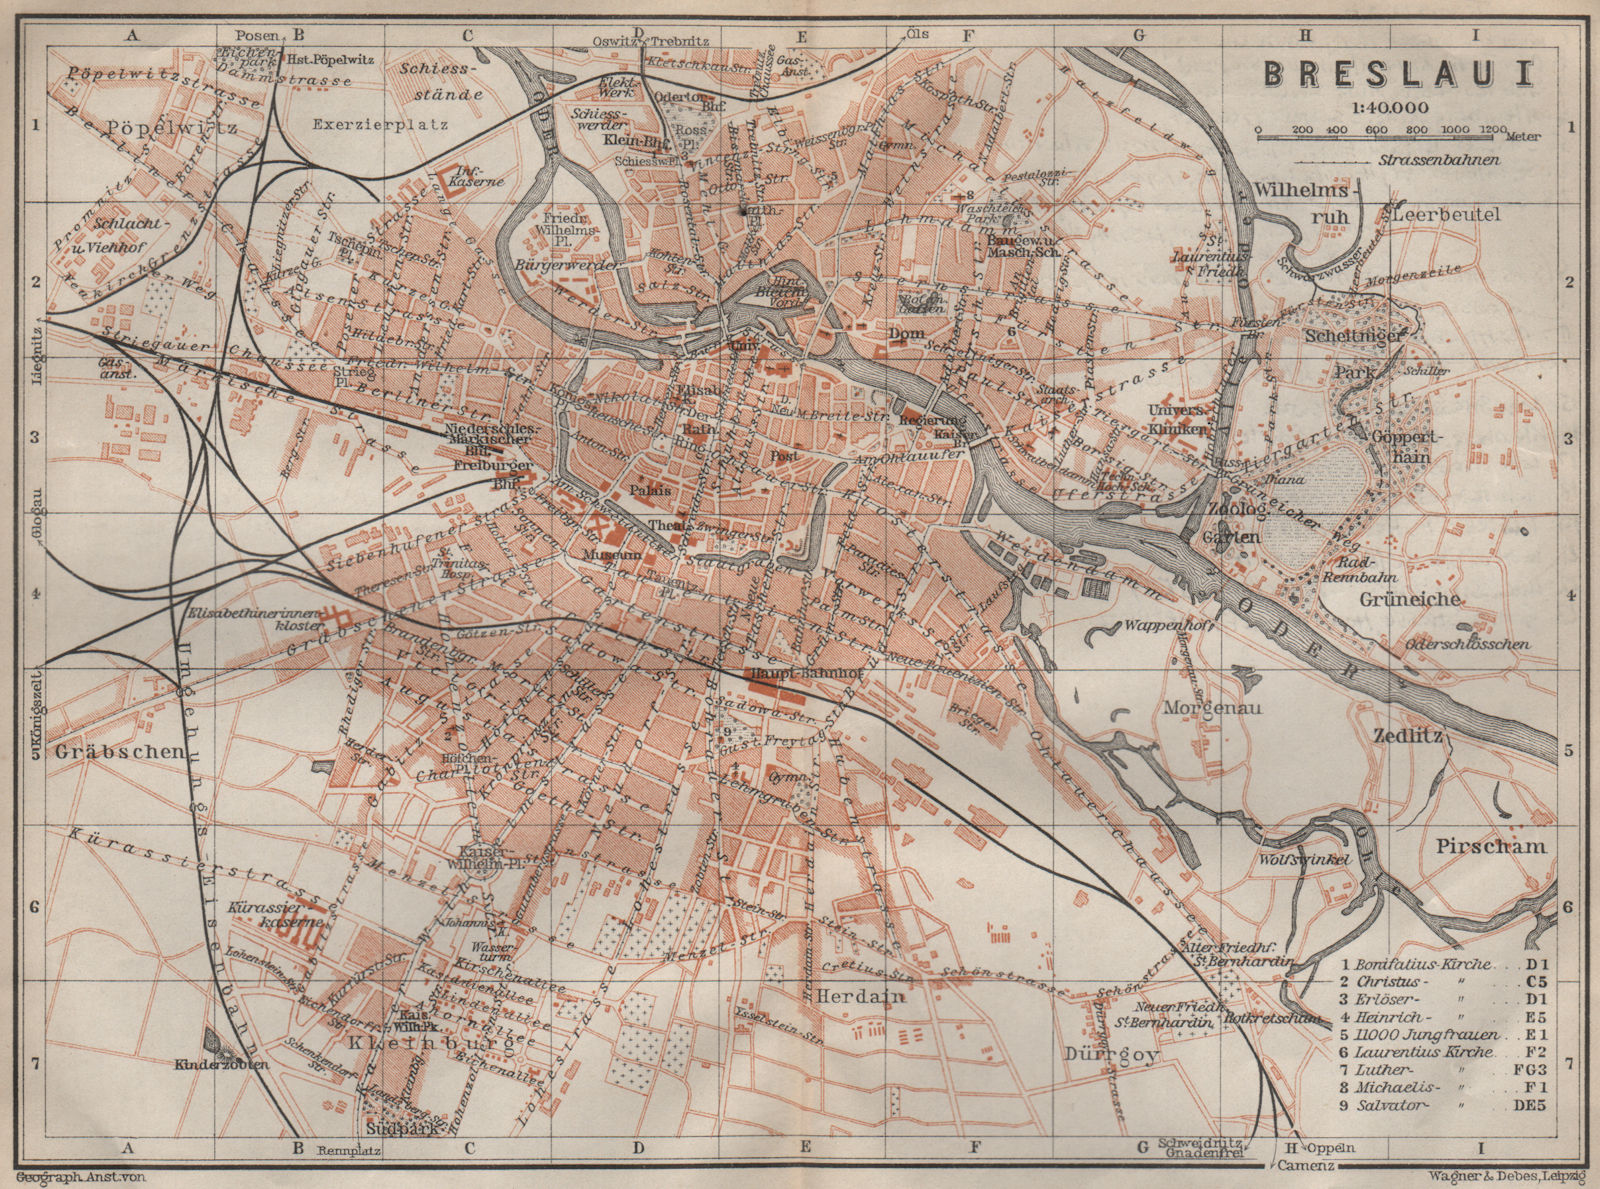 BRESLAU WROCŁAW antique town city plan miasta I. Wroclaw. Poland mapa 1910